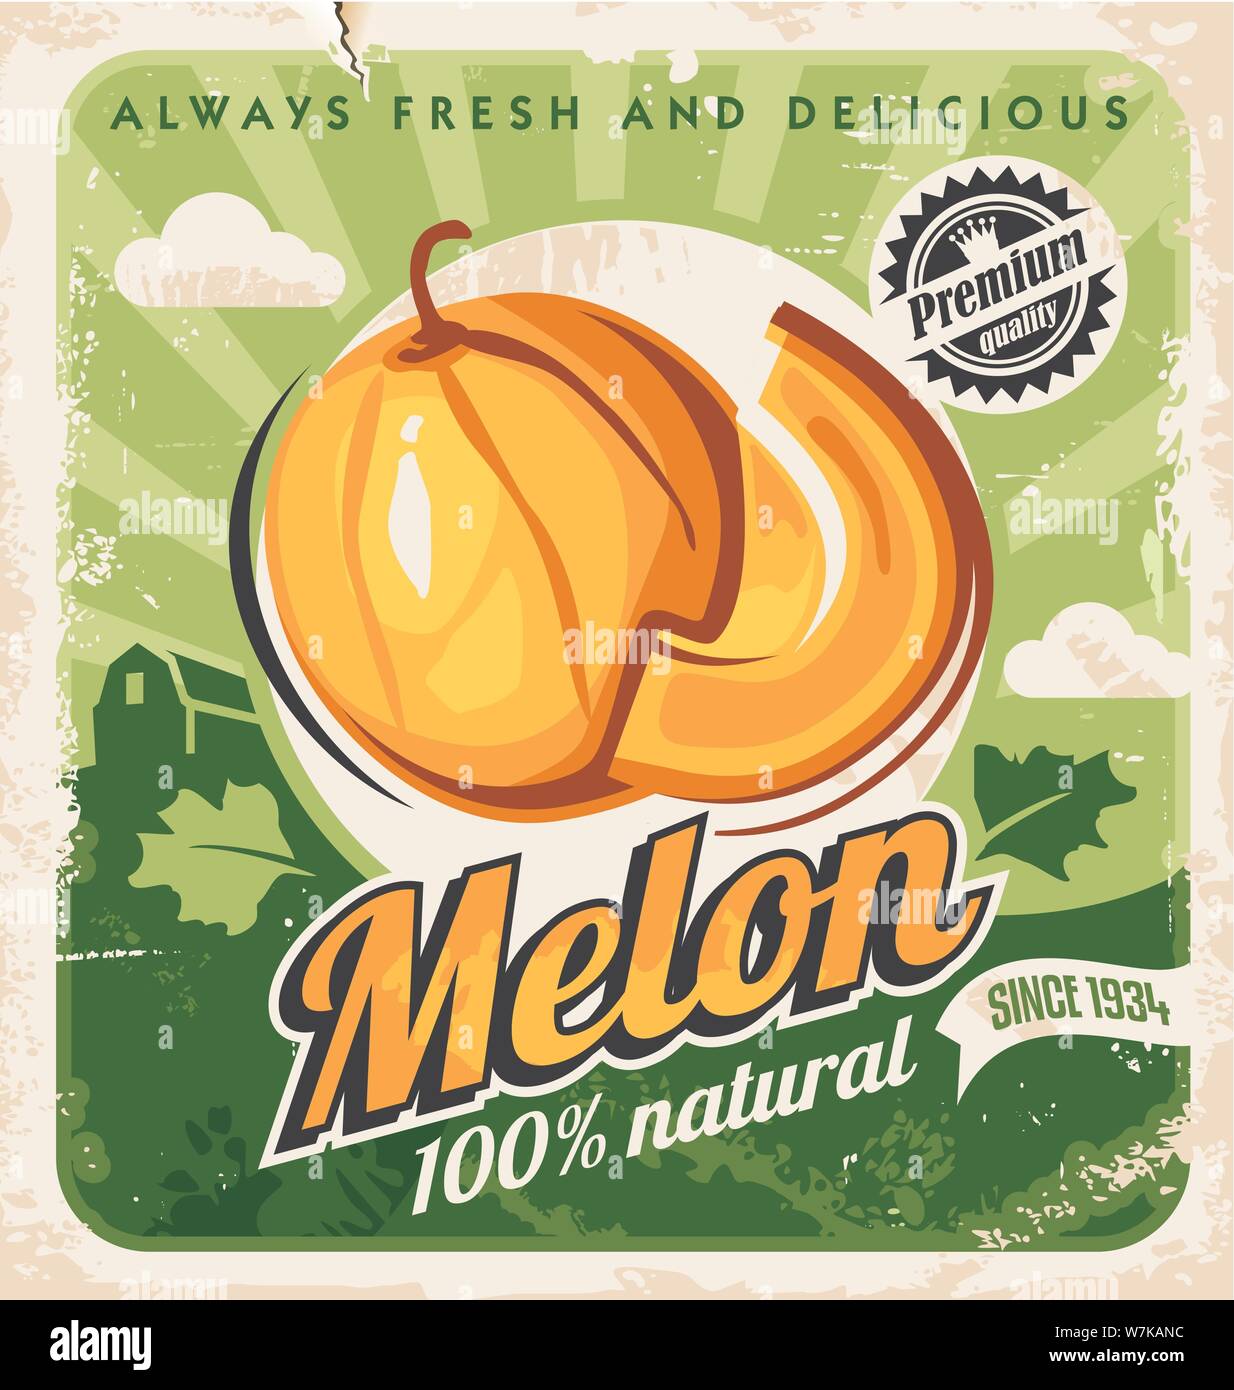 Cantaloupe melon retro poster design. Farm fresh melons vintage ad concept. Fruits and vegetables vector illustration. Stock Vector